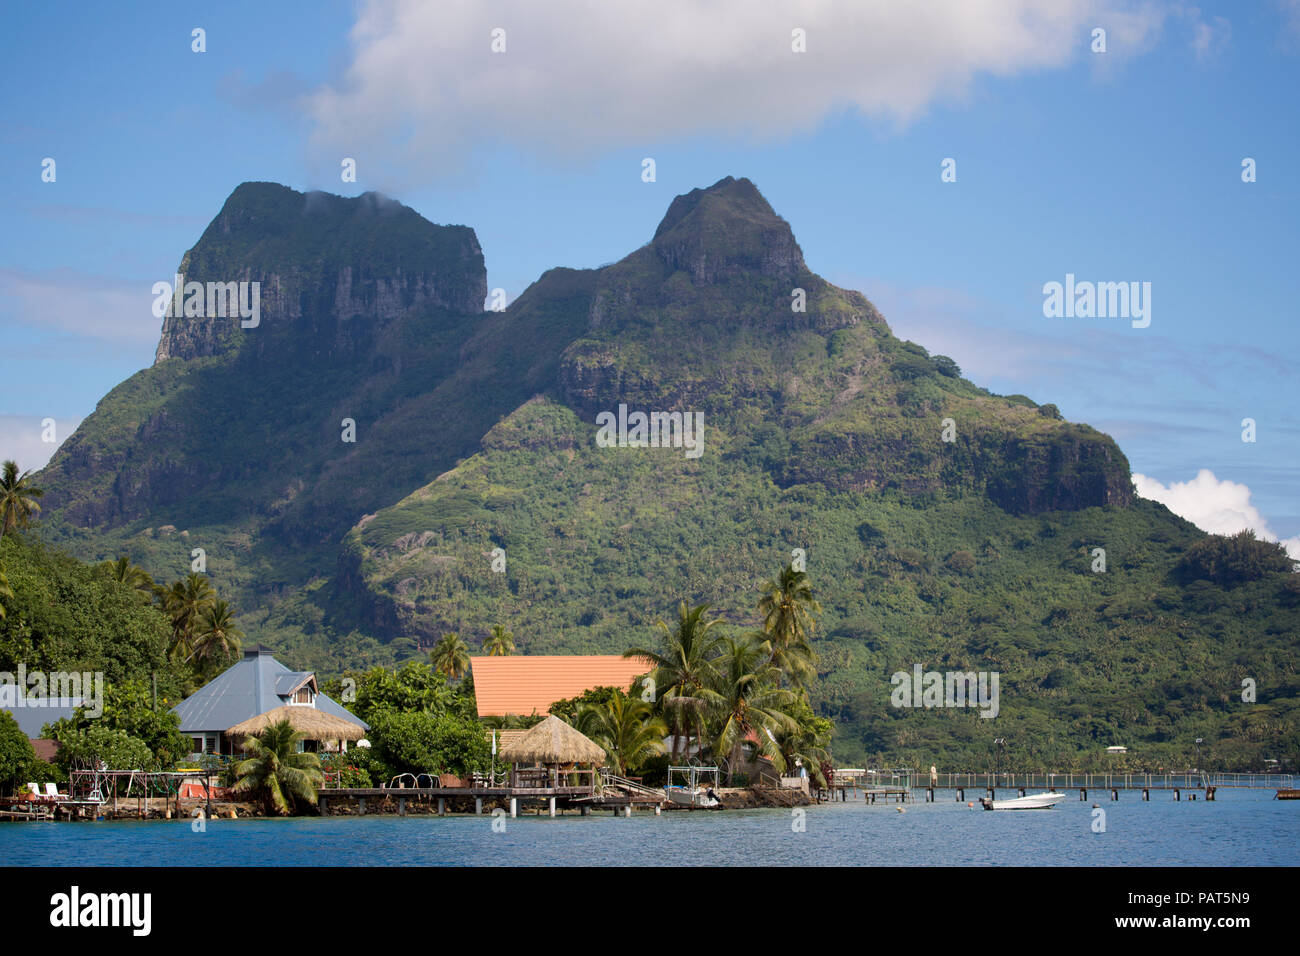 Pacific Ocean, French Polynesia, Society Islands, Bora Bora. View of Mount Otemanu and Mount Pahia. Stock Photo